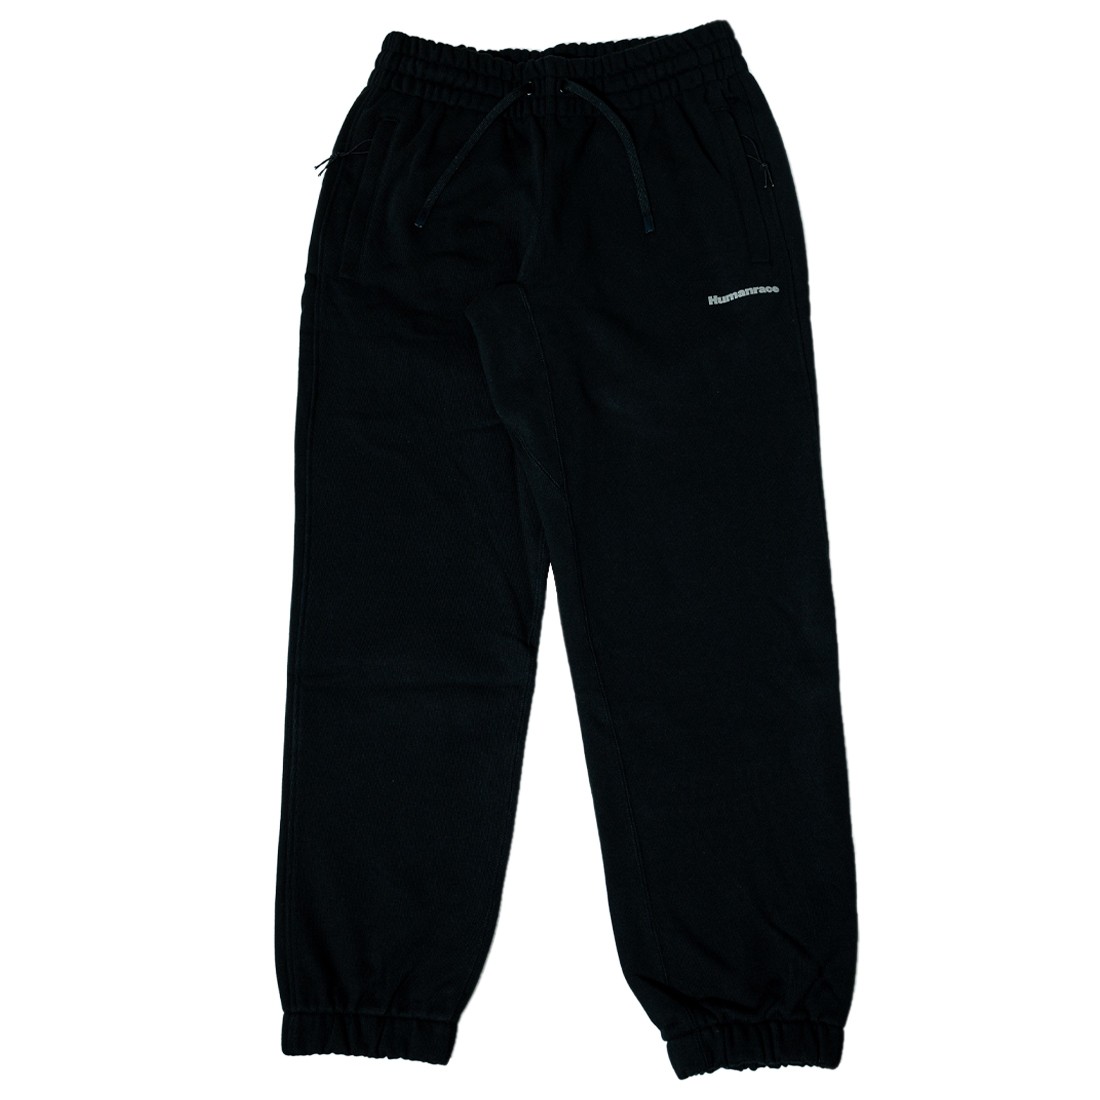 Adidas x Pharrell Williams Men Basics Pants (black)